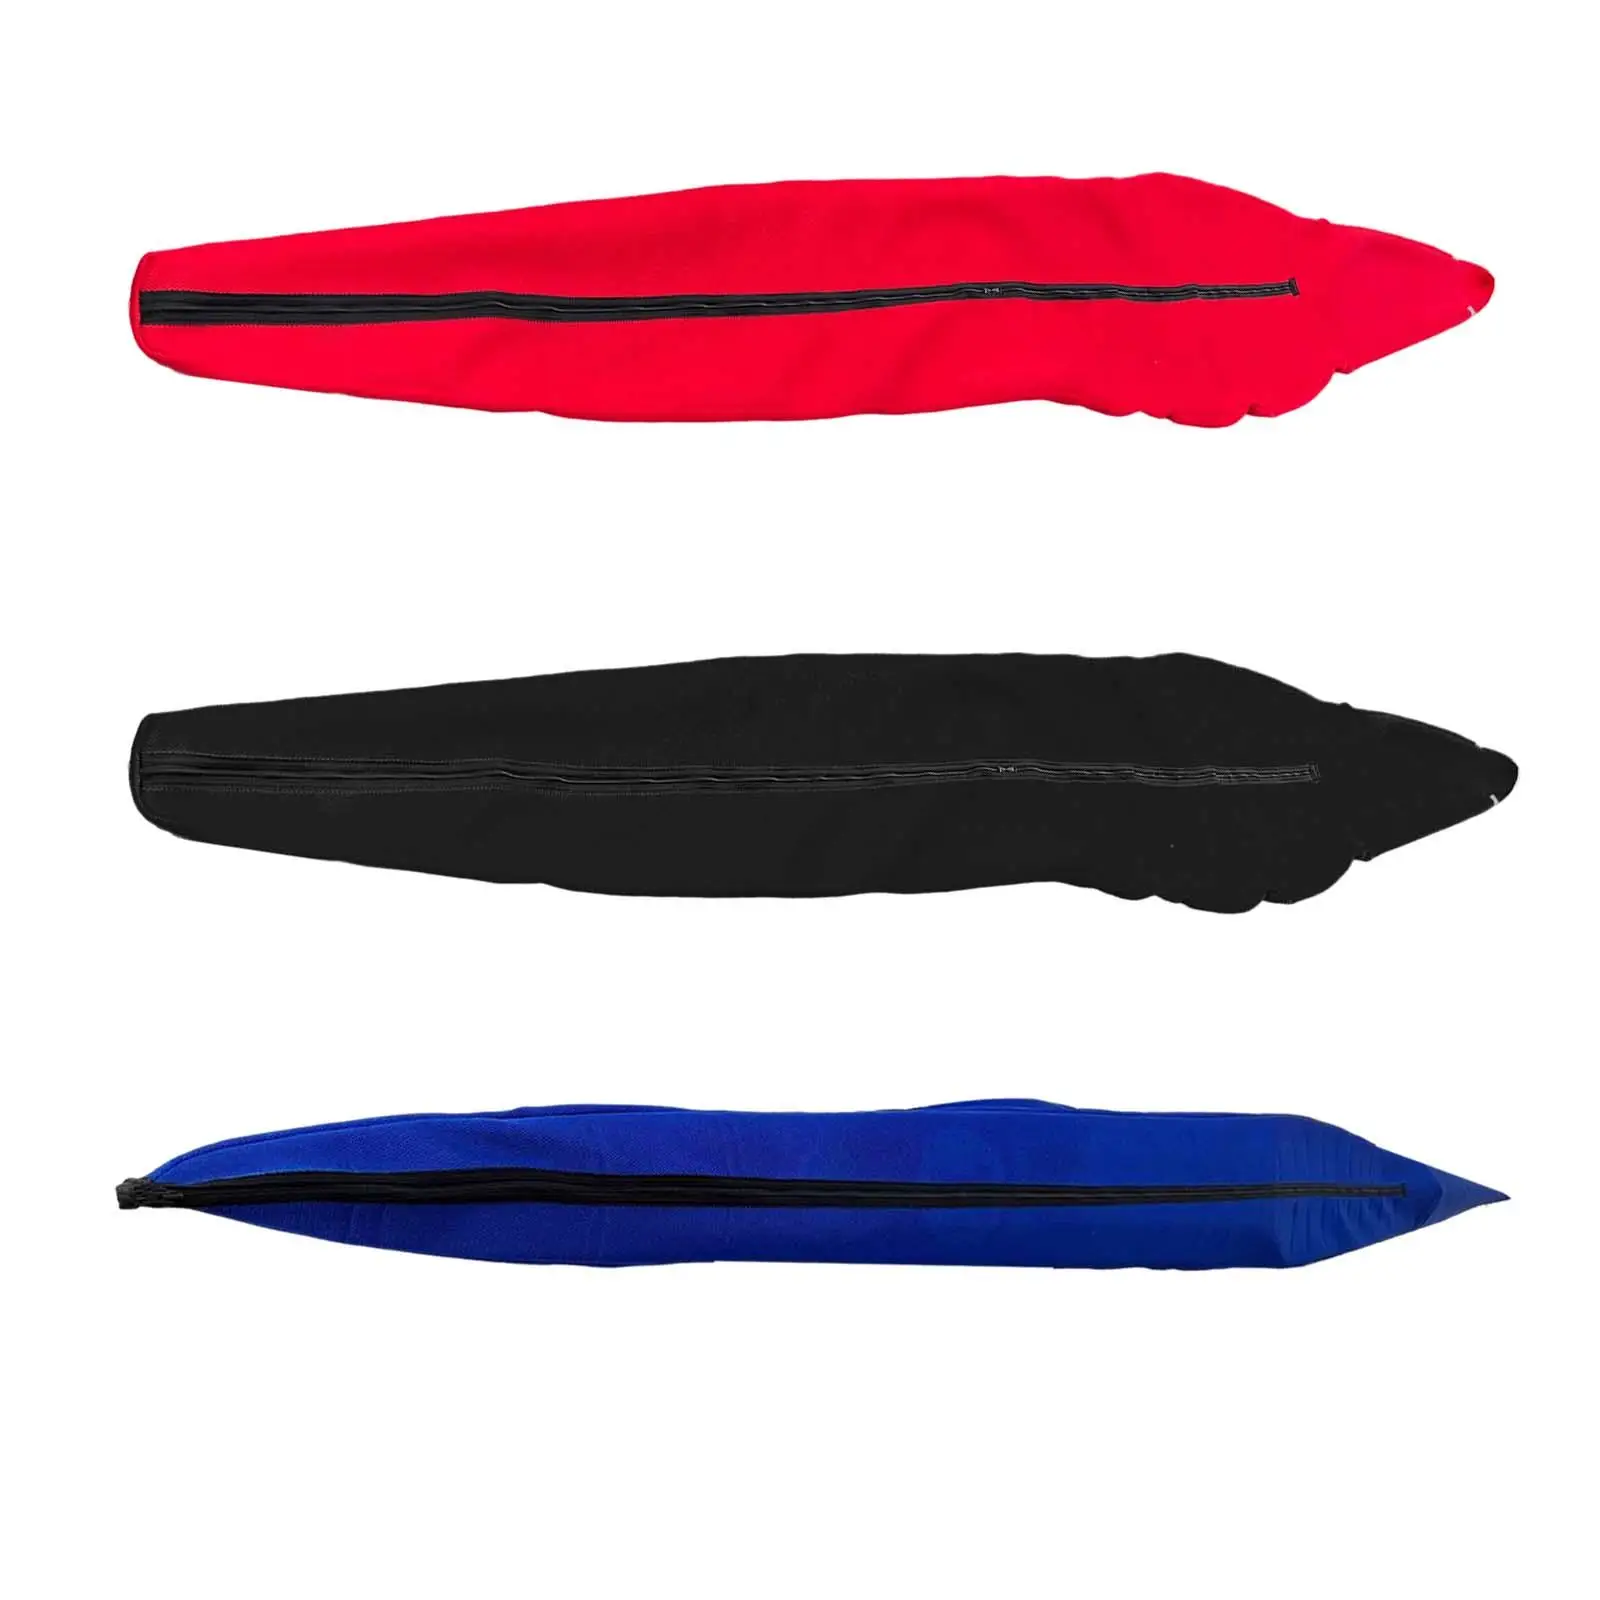 Kayak Covers Storage Protection Thicken for Indoor/Outdoor Kayak Accessories